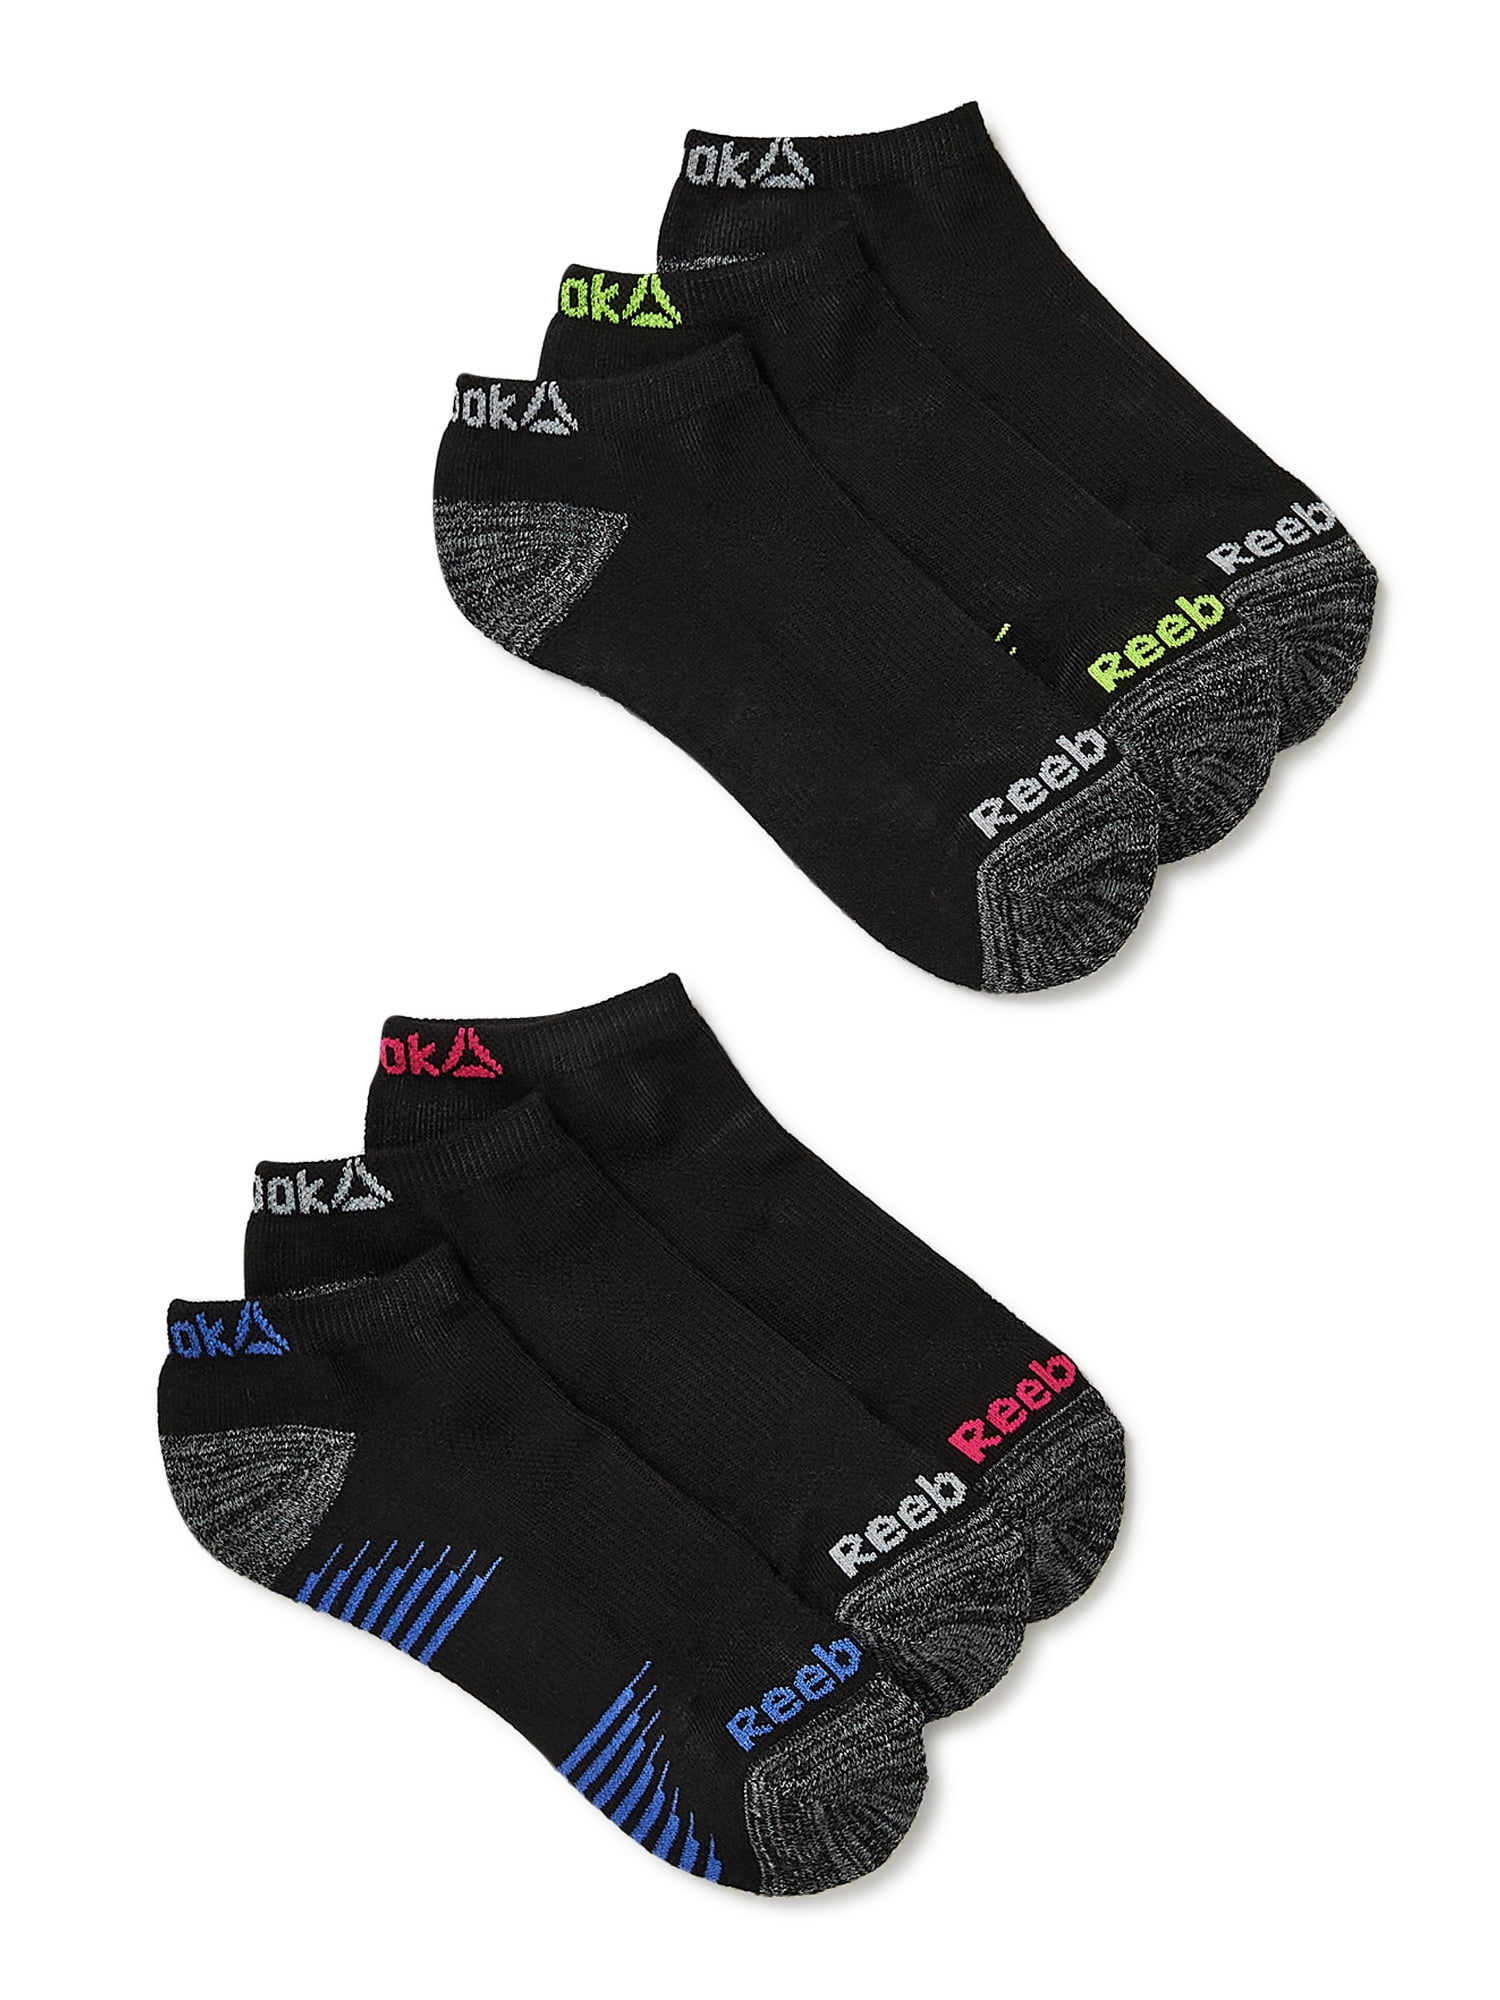 Reebok Women’s Athletic Socks Performance Low Cut Socks 6 Pack 